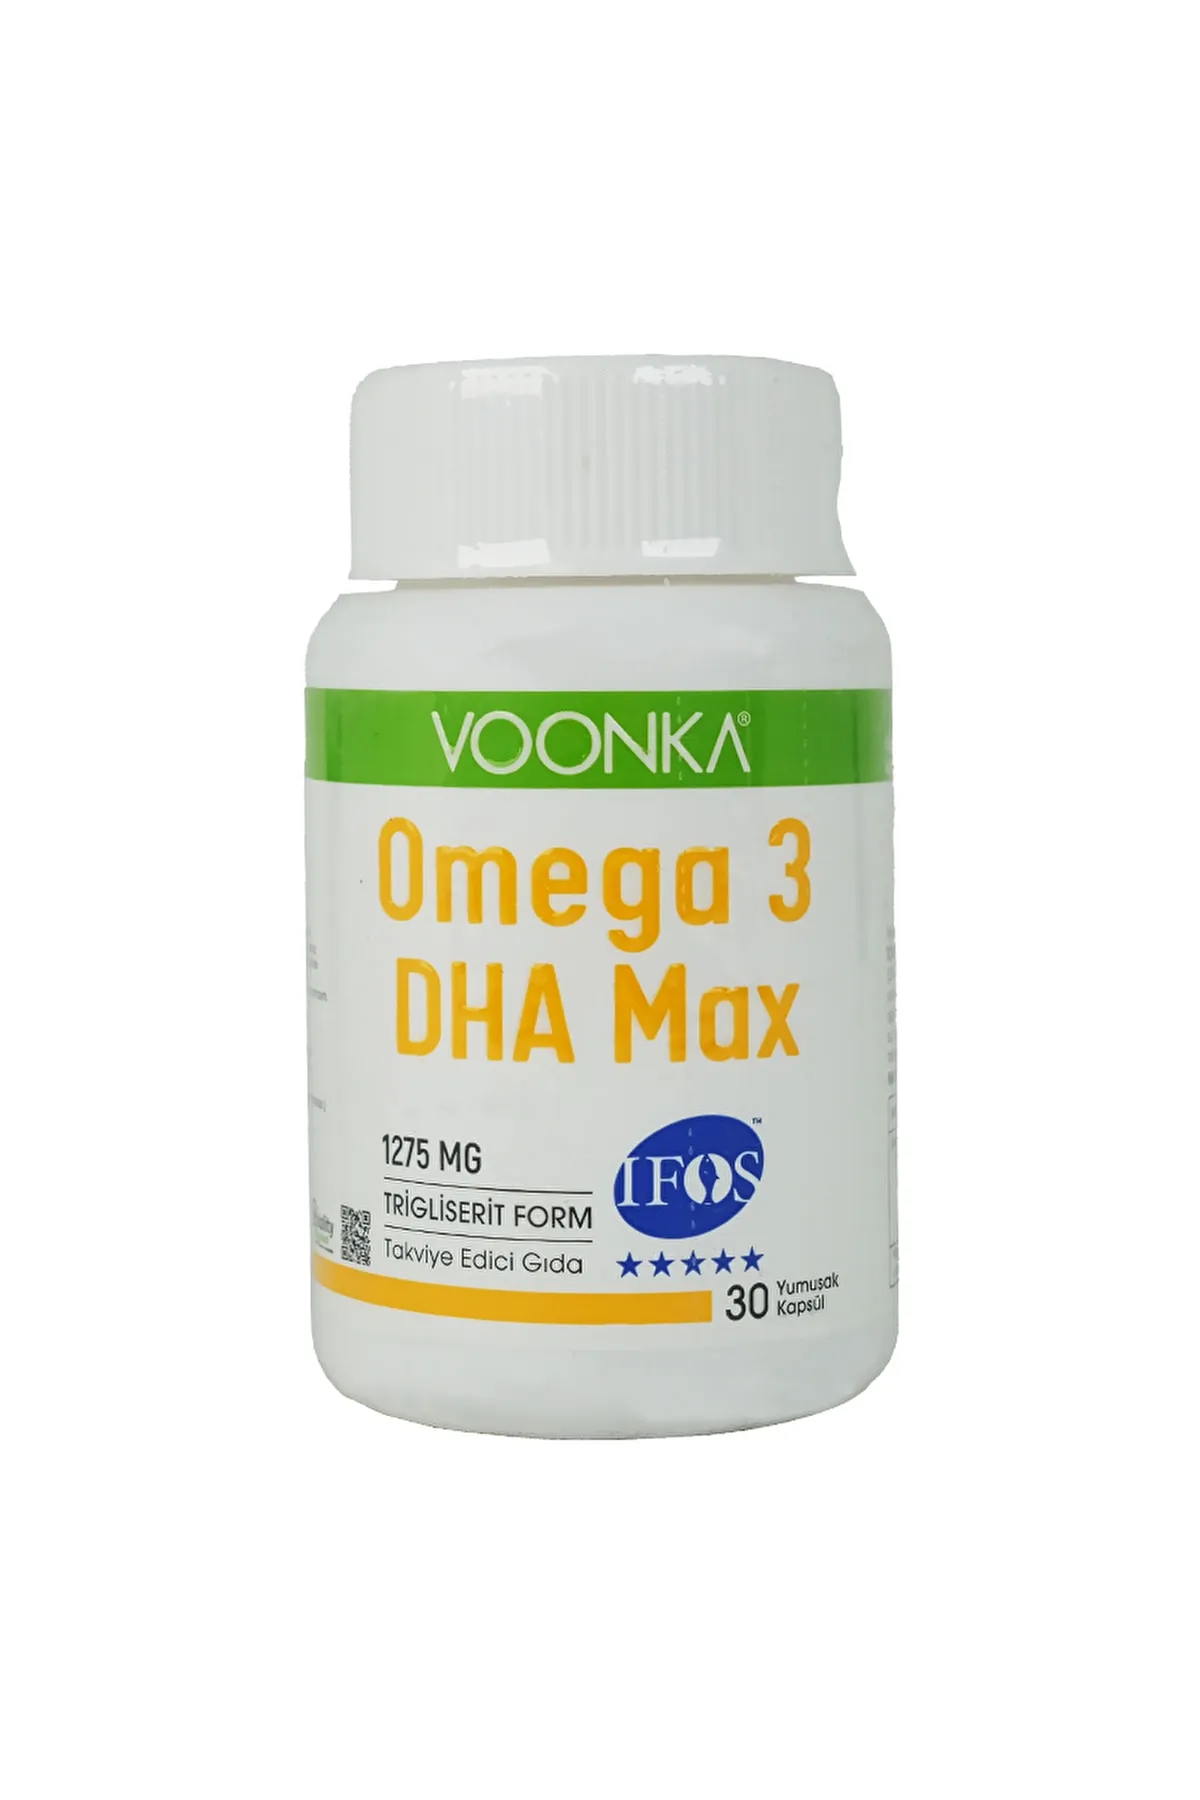 Voonka Omega 3 DHA Max Takviye Edici Gıda 30 Yumuşak Kapsül - 1